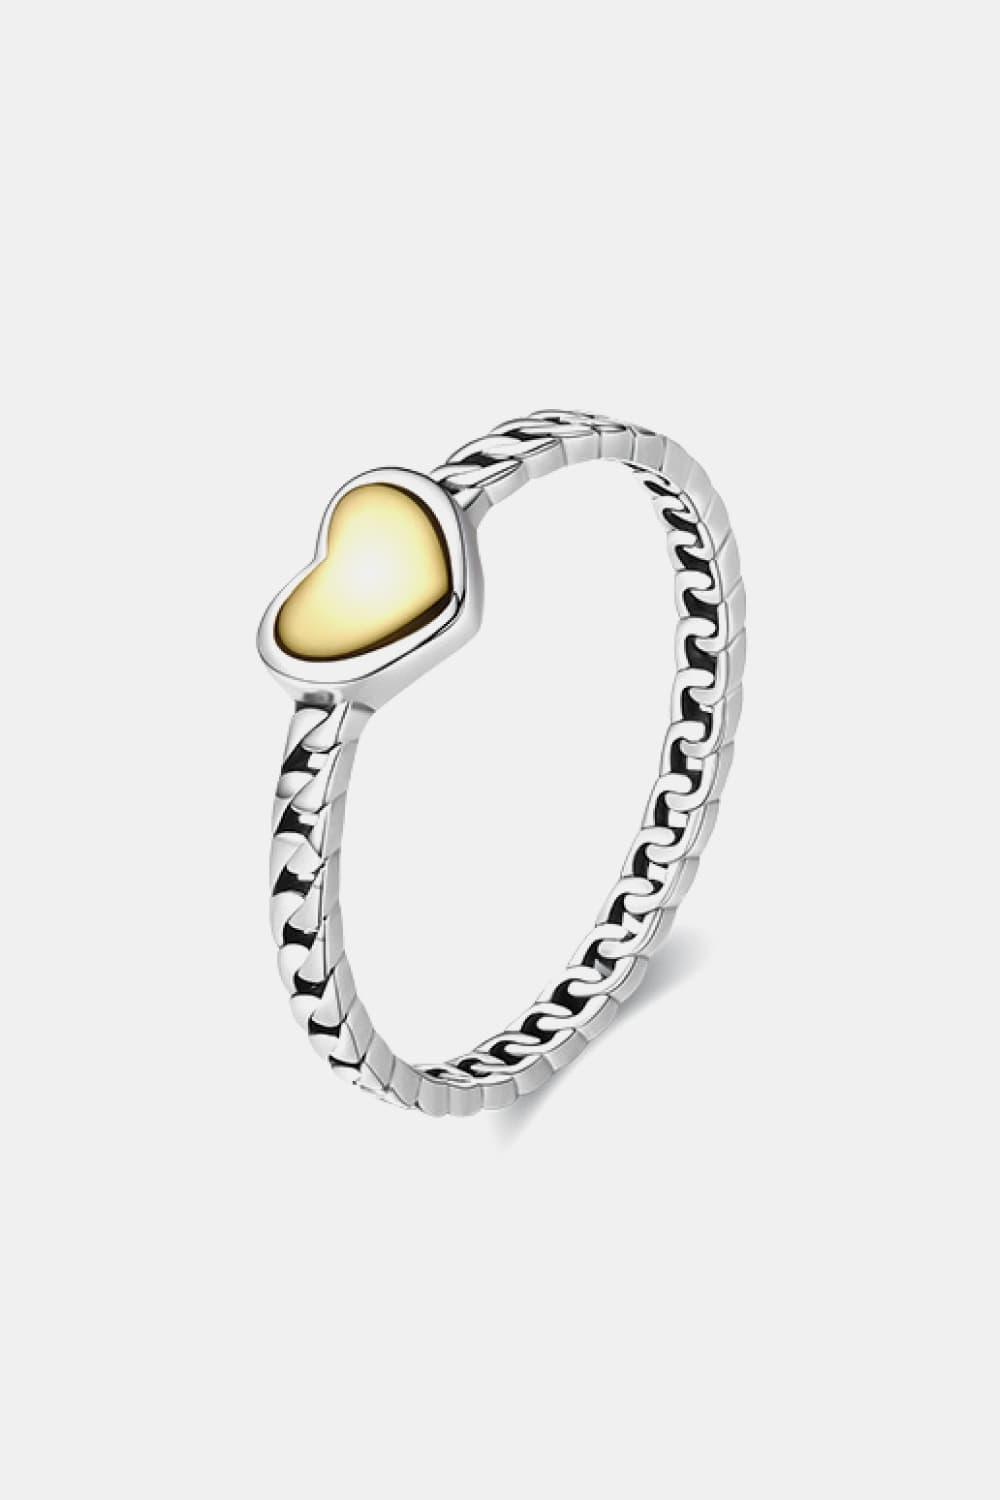 Make Perfect 925 Sterling Silver Heart Ring - MXSTUDIO.COM